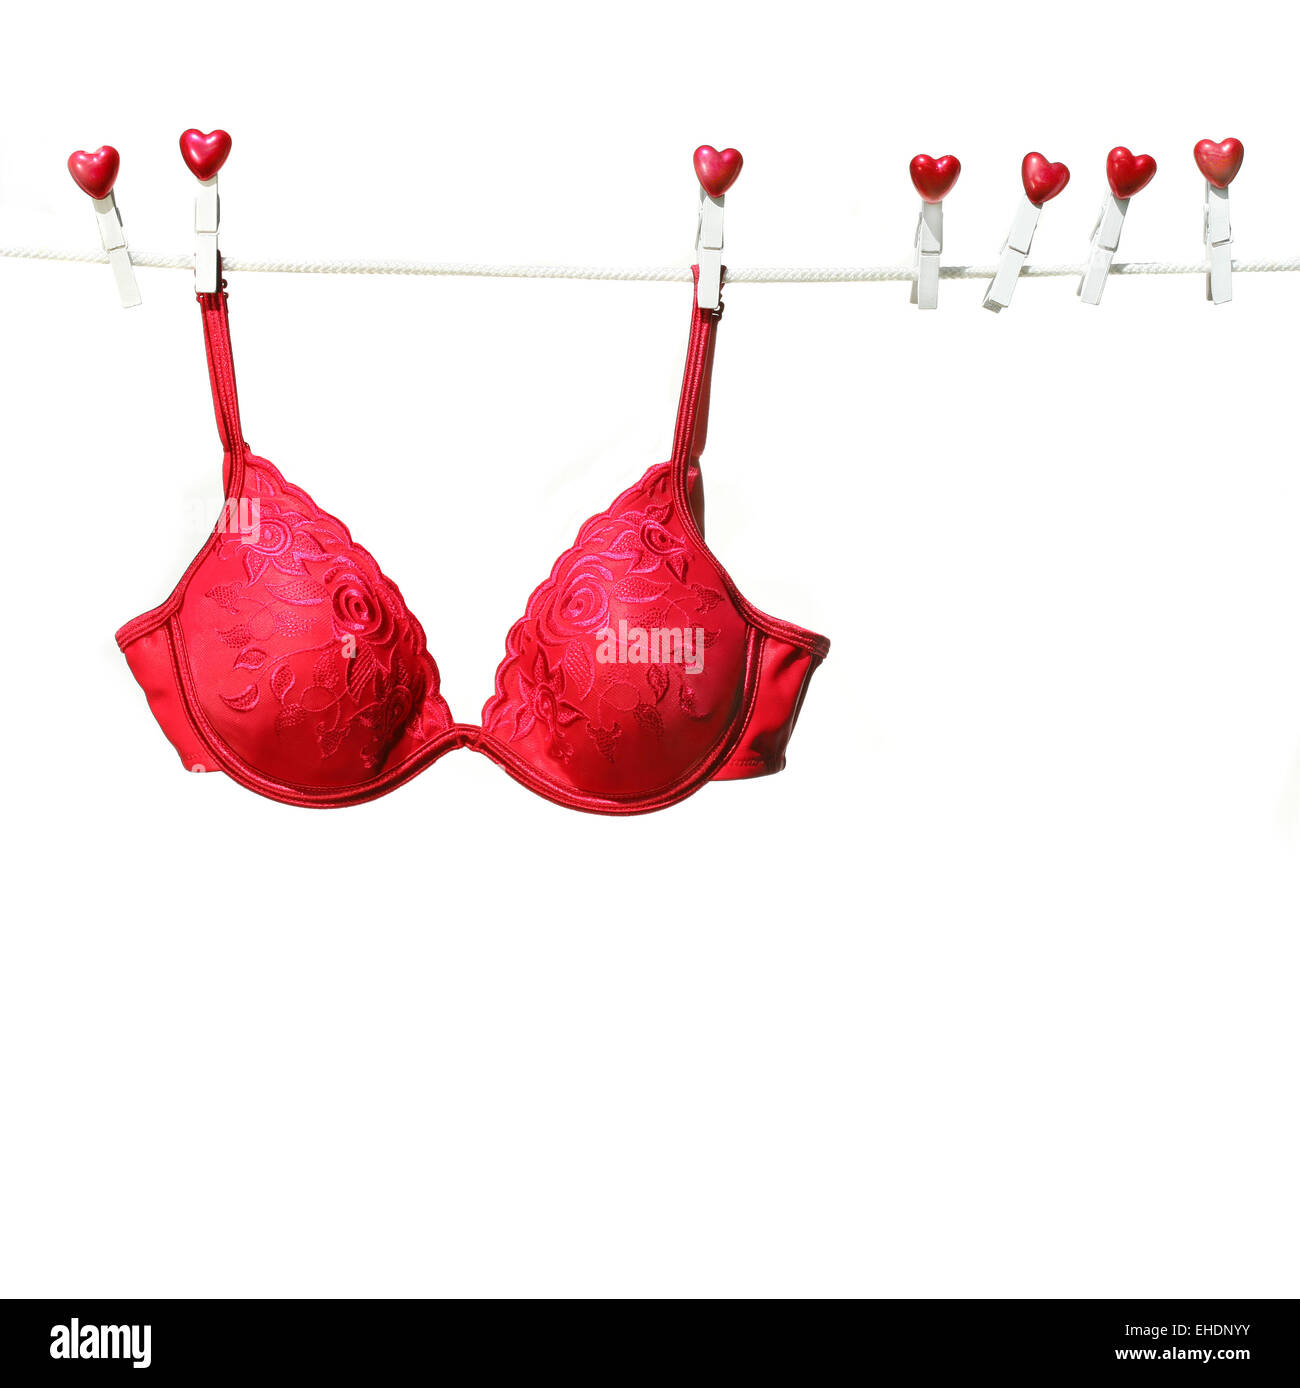 https://c8.alamy.com/comp/EHDNYY/fancy-red-bra-hanging-on-clothesline-EHDNYY.jpg